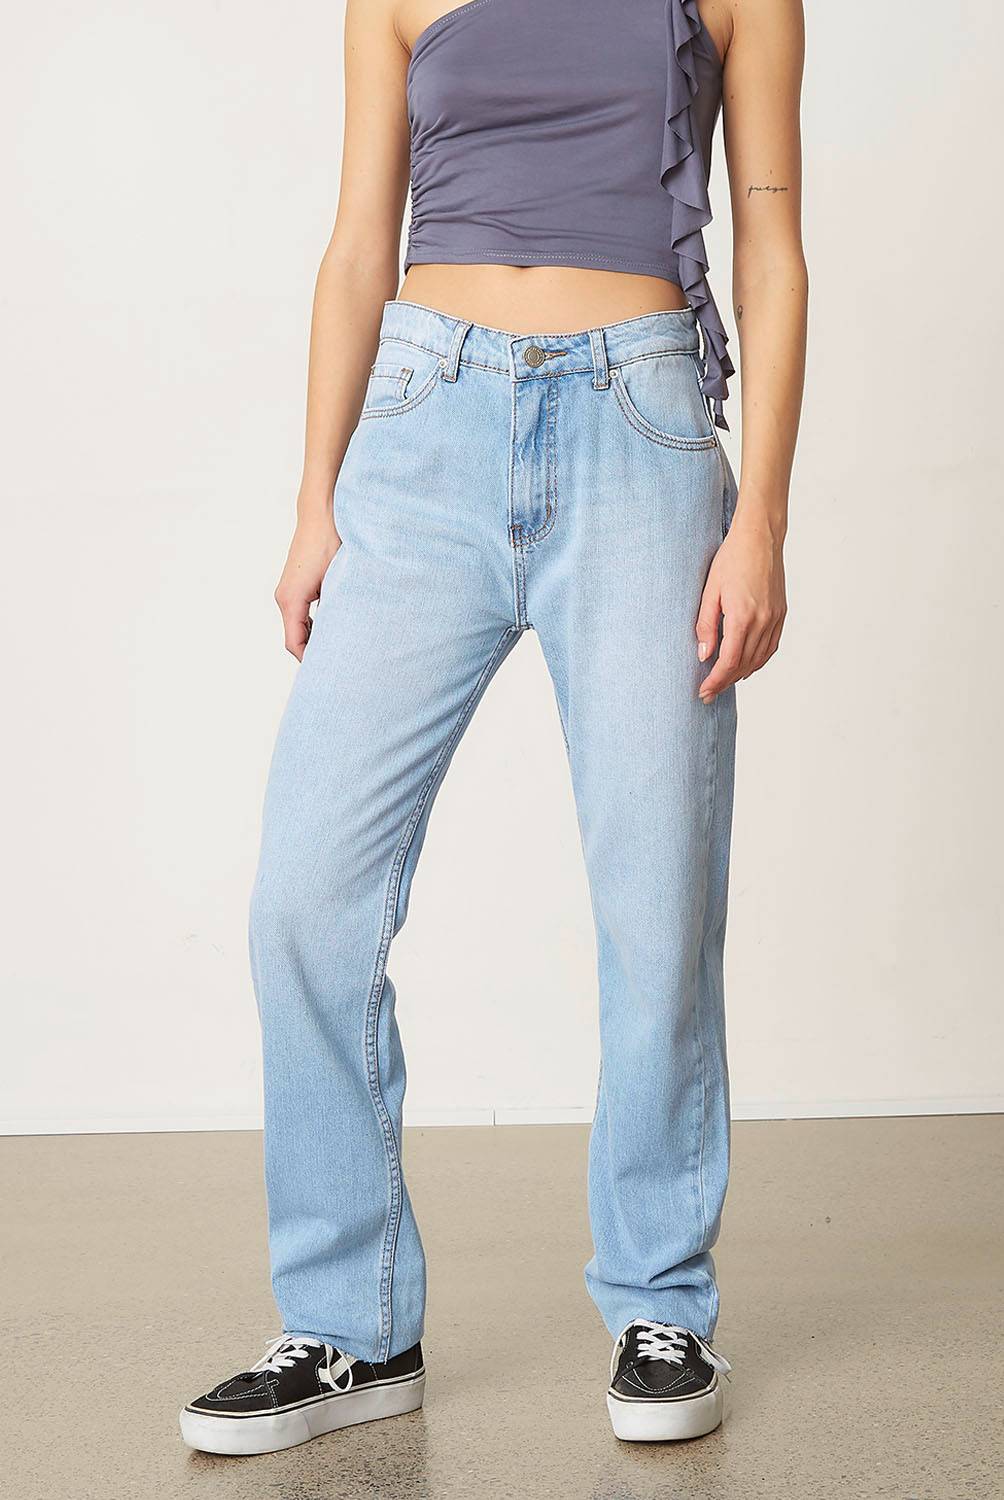 Americanino Jeans Cargo Tiro Medio Algodón Mujer